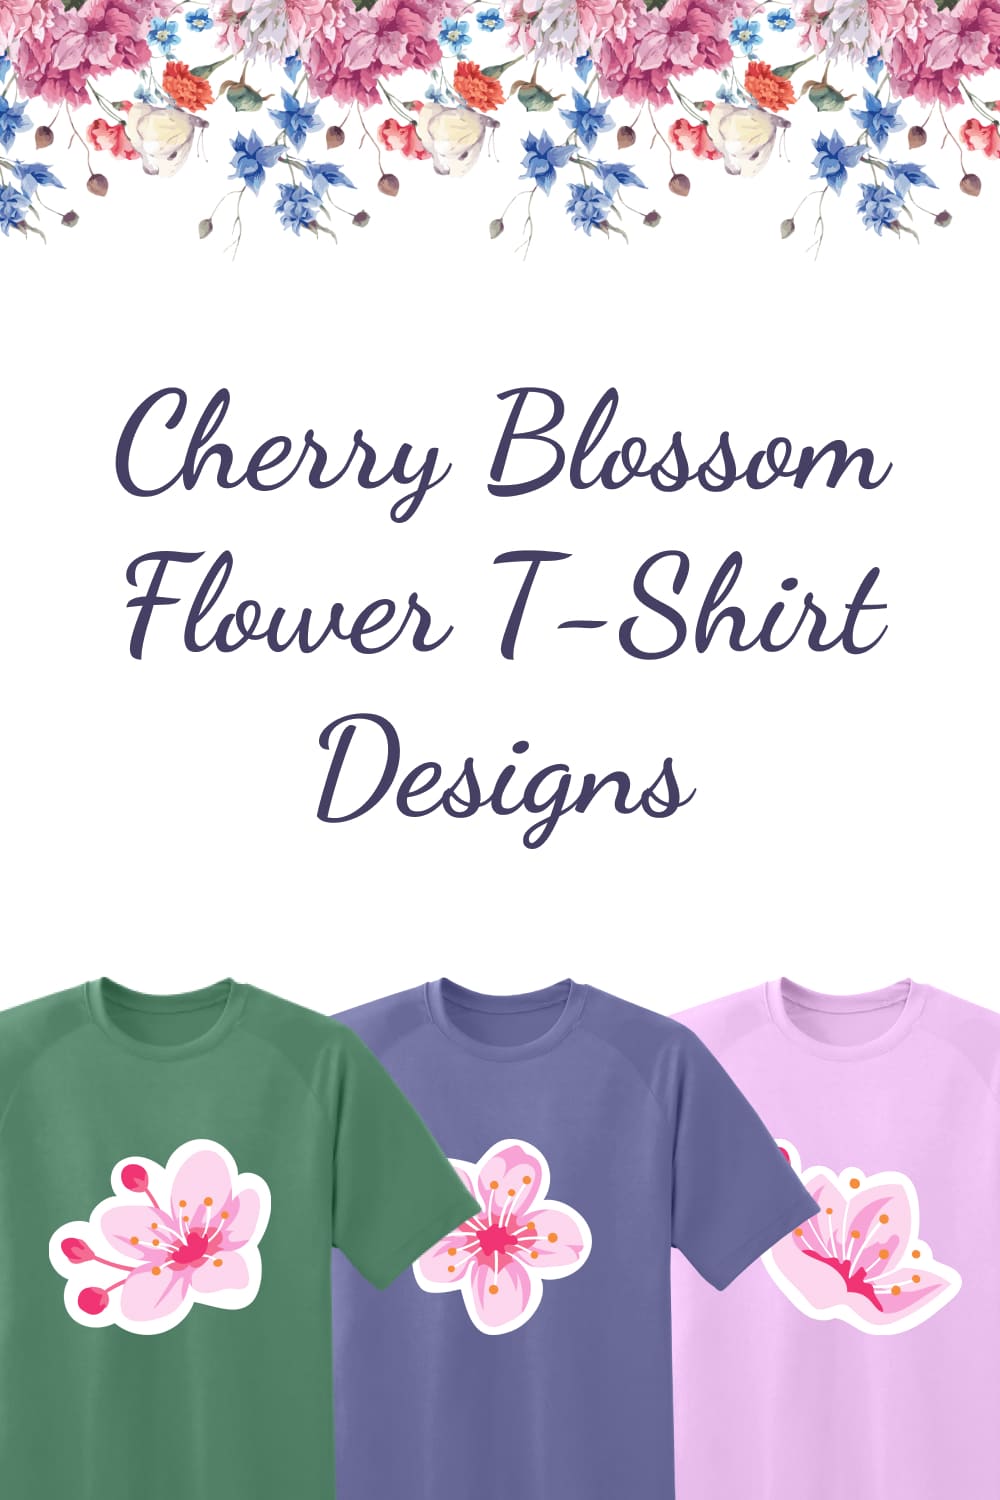 Cherry blossom flower t-shirt designs.